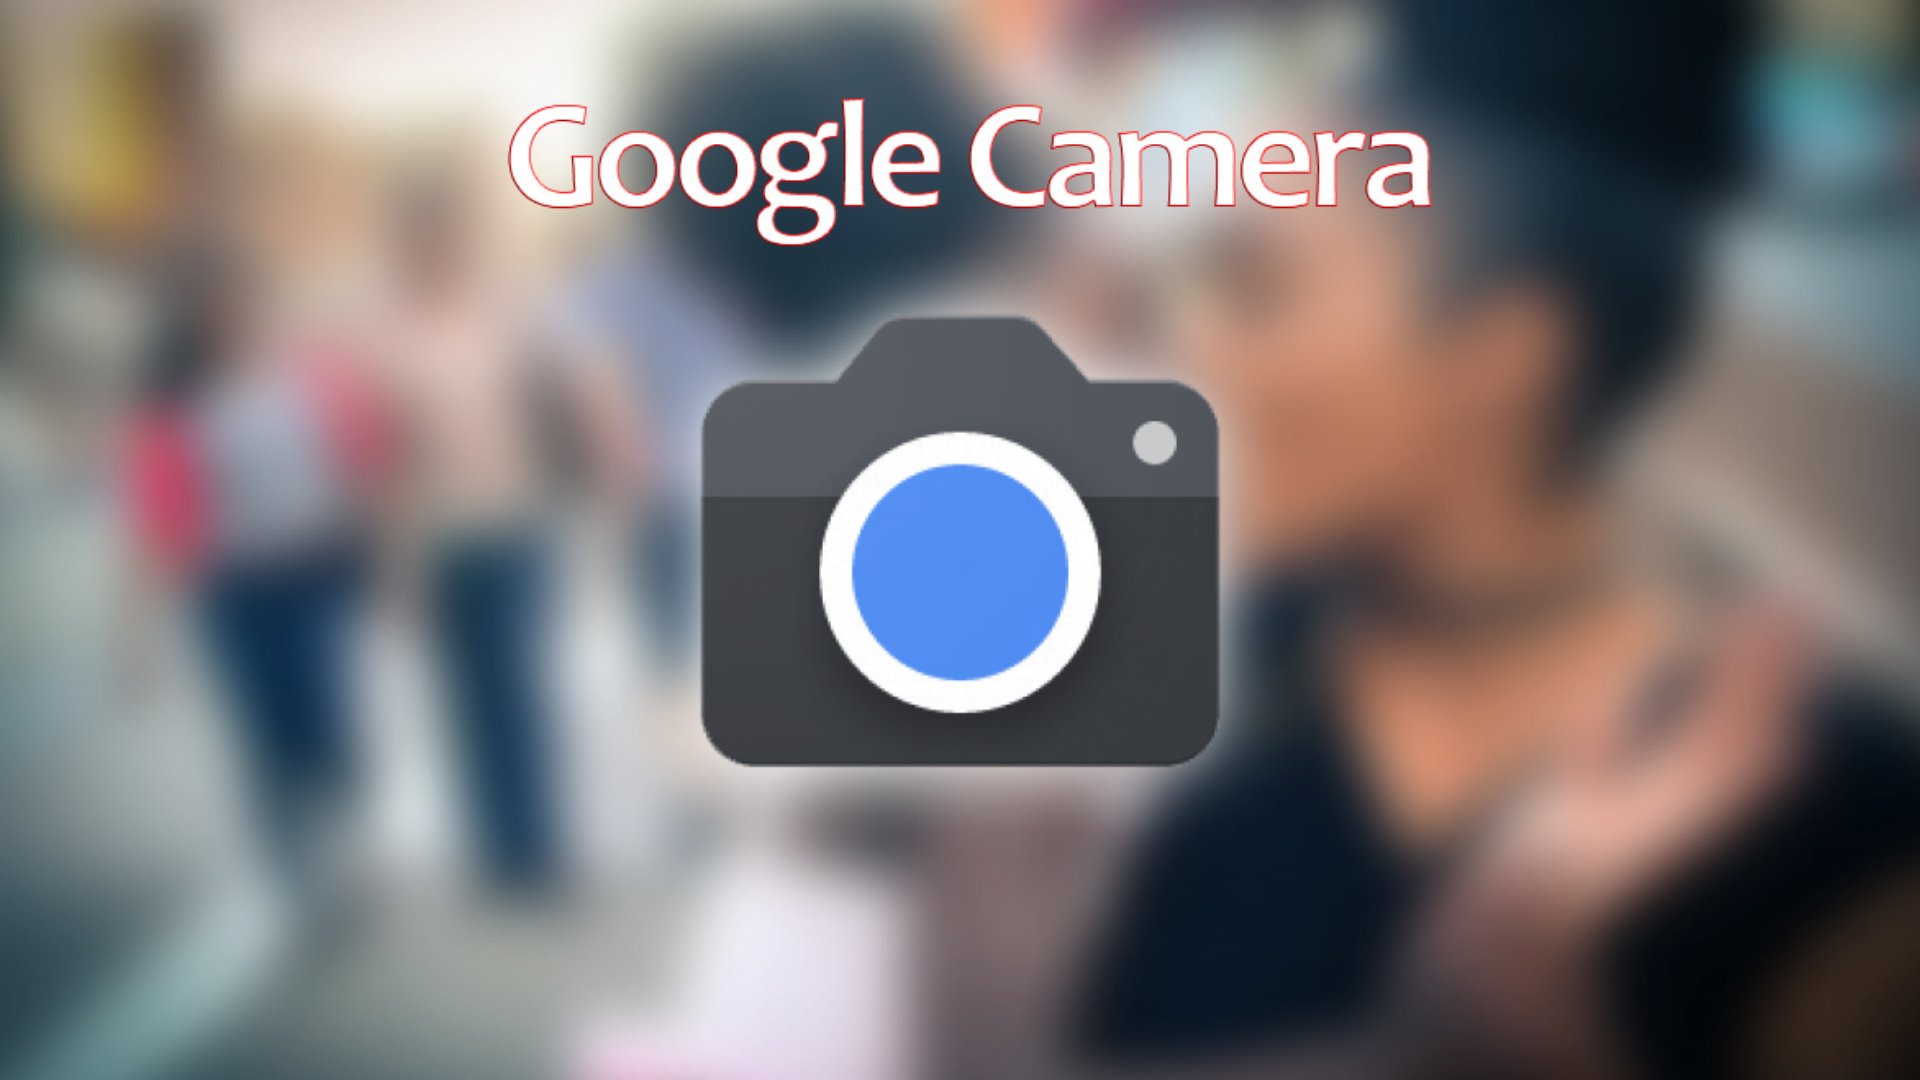 Гугл камера на английском. Google Camera. Google Camera ж. Гугл человек с камерой. Pyfrнургл камера.